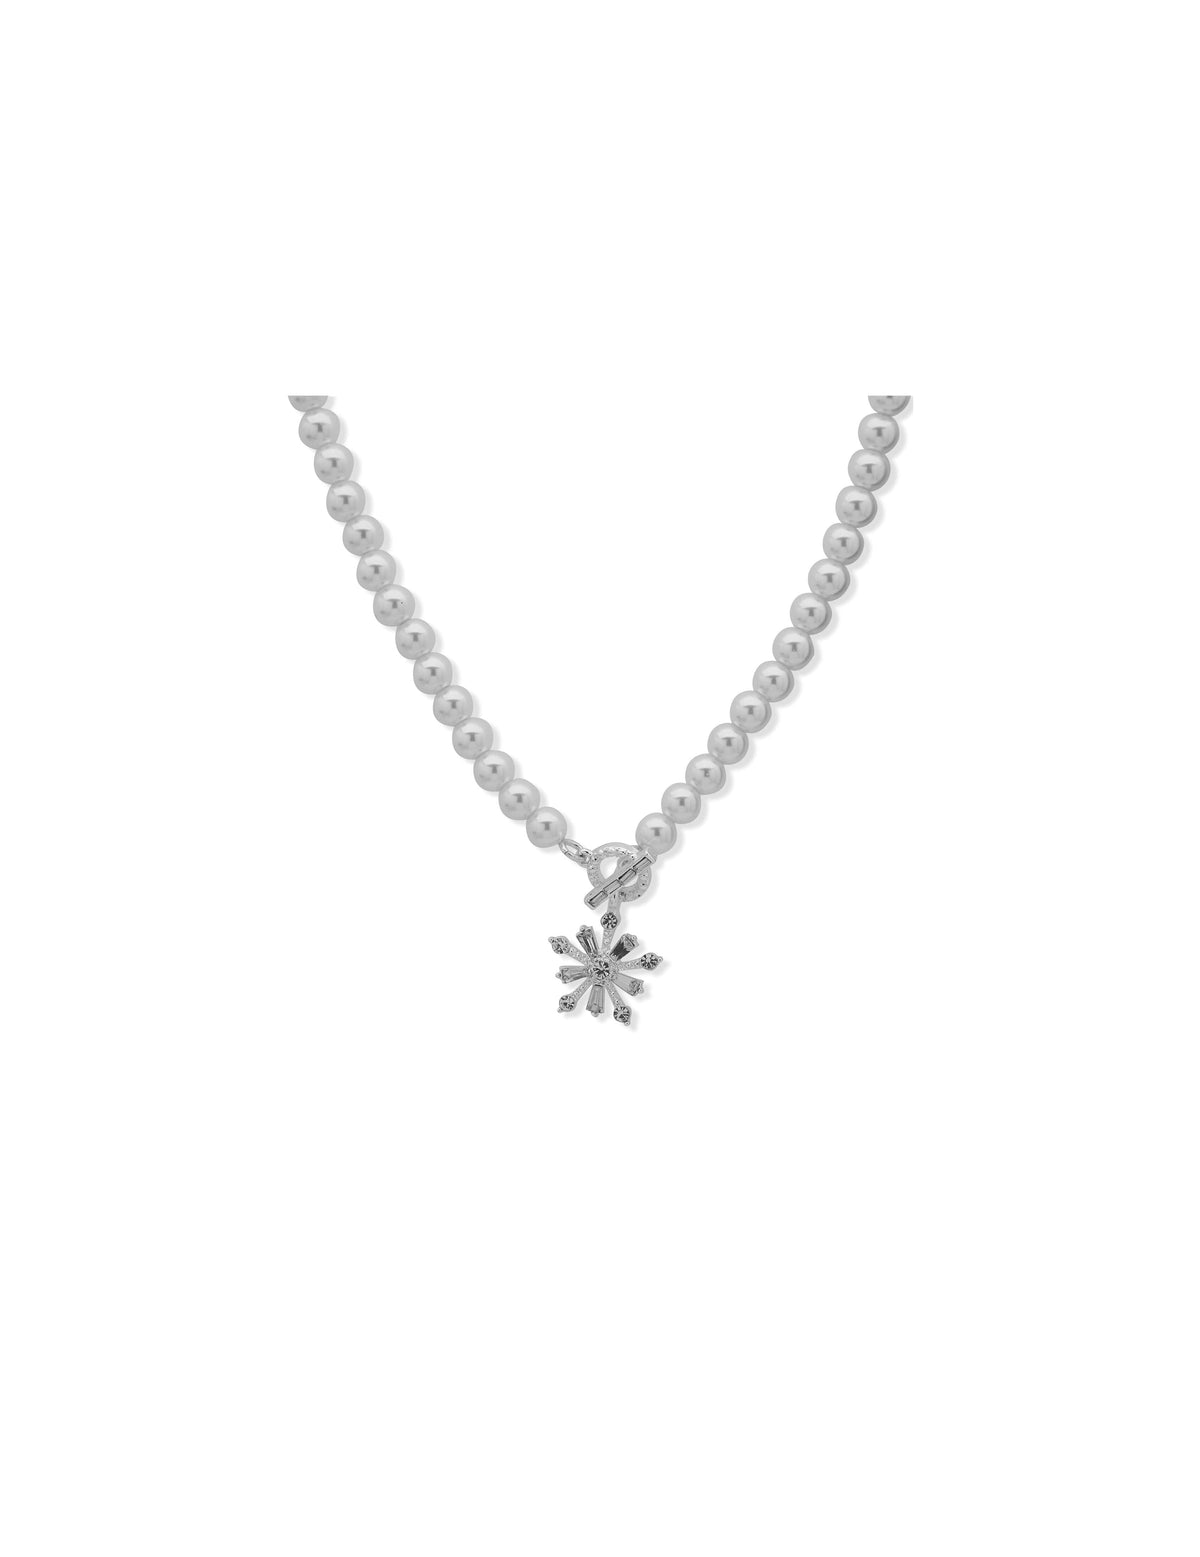 Anne Klein Silver Tone Snowflake Pendant Necklace